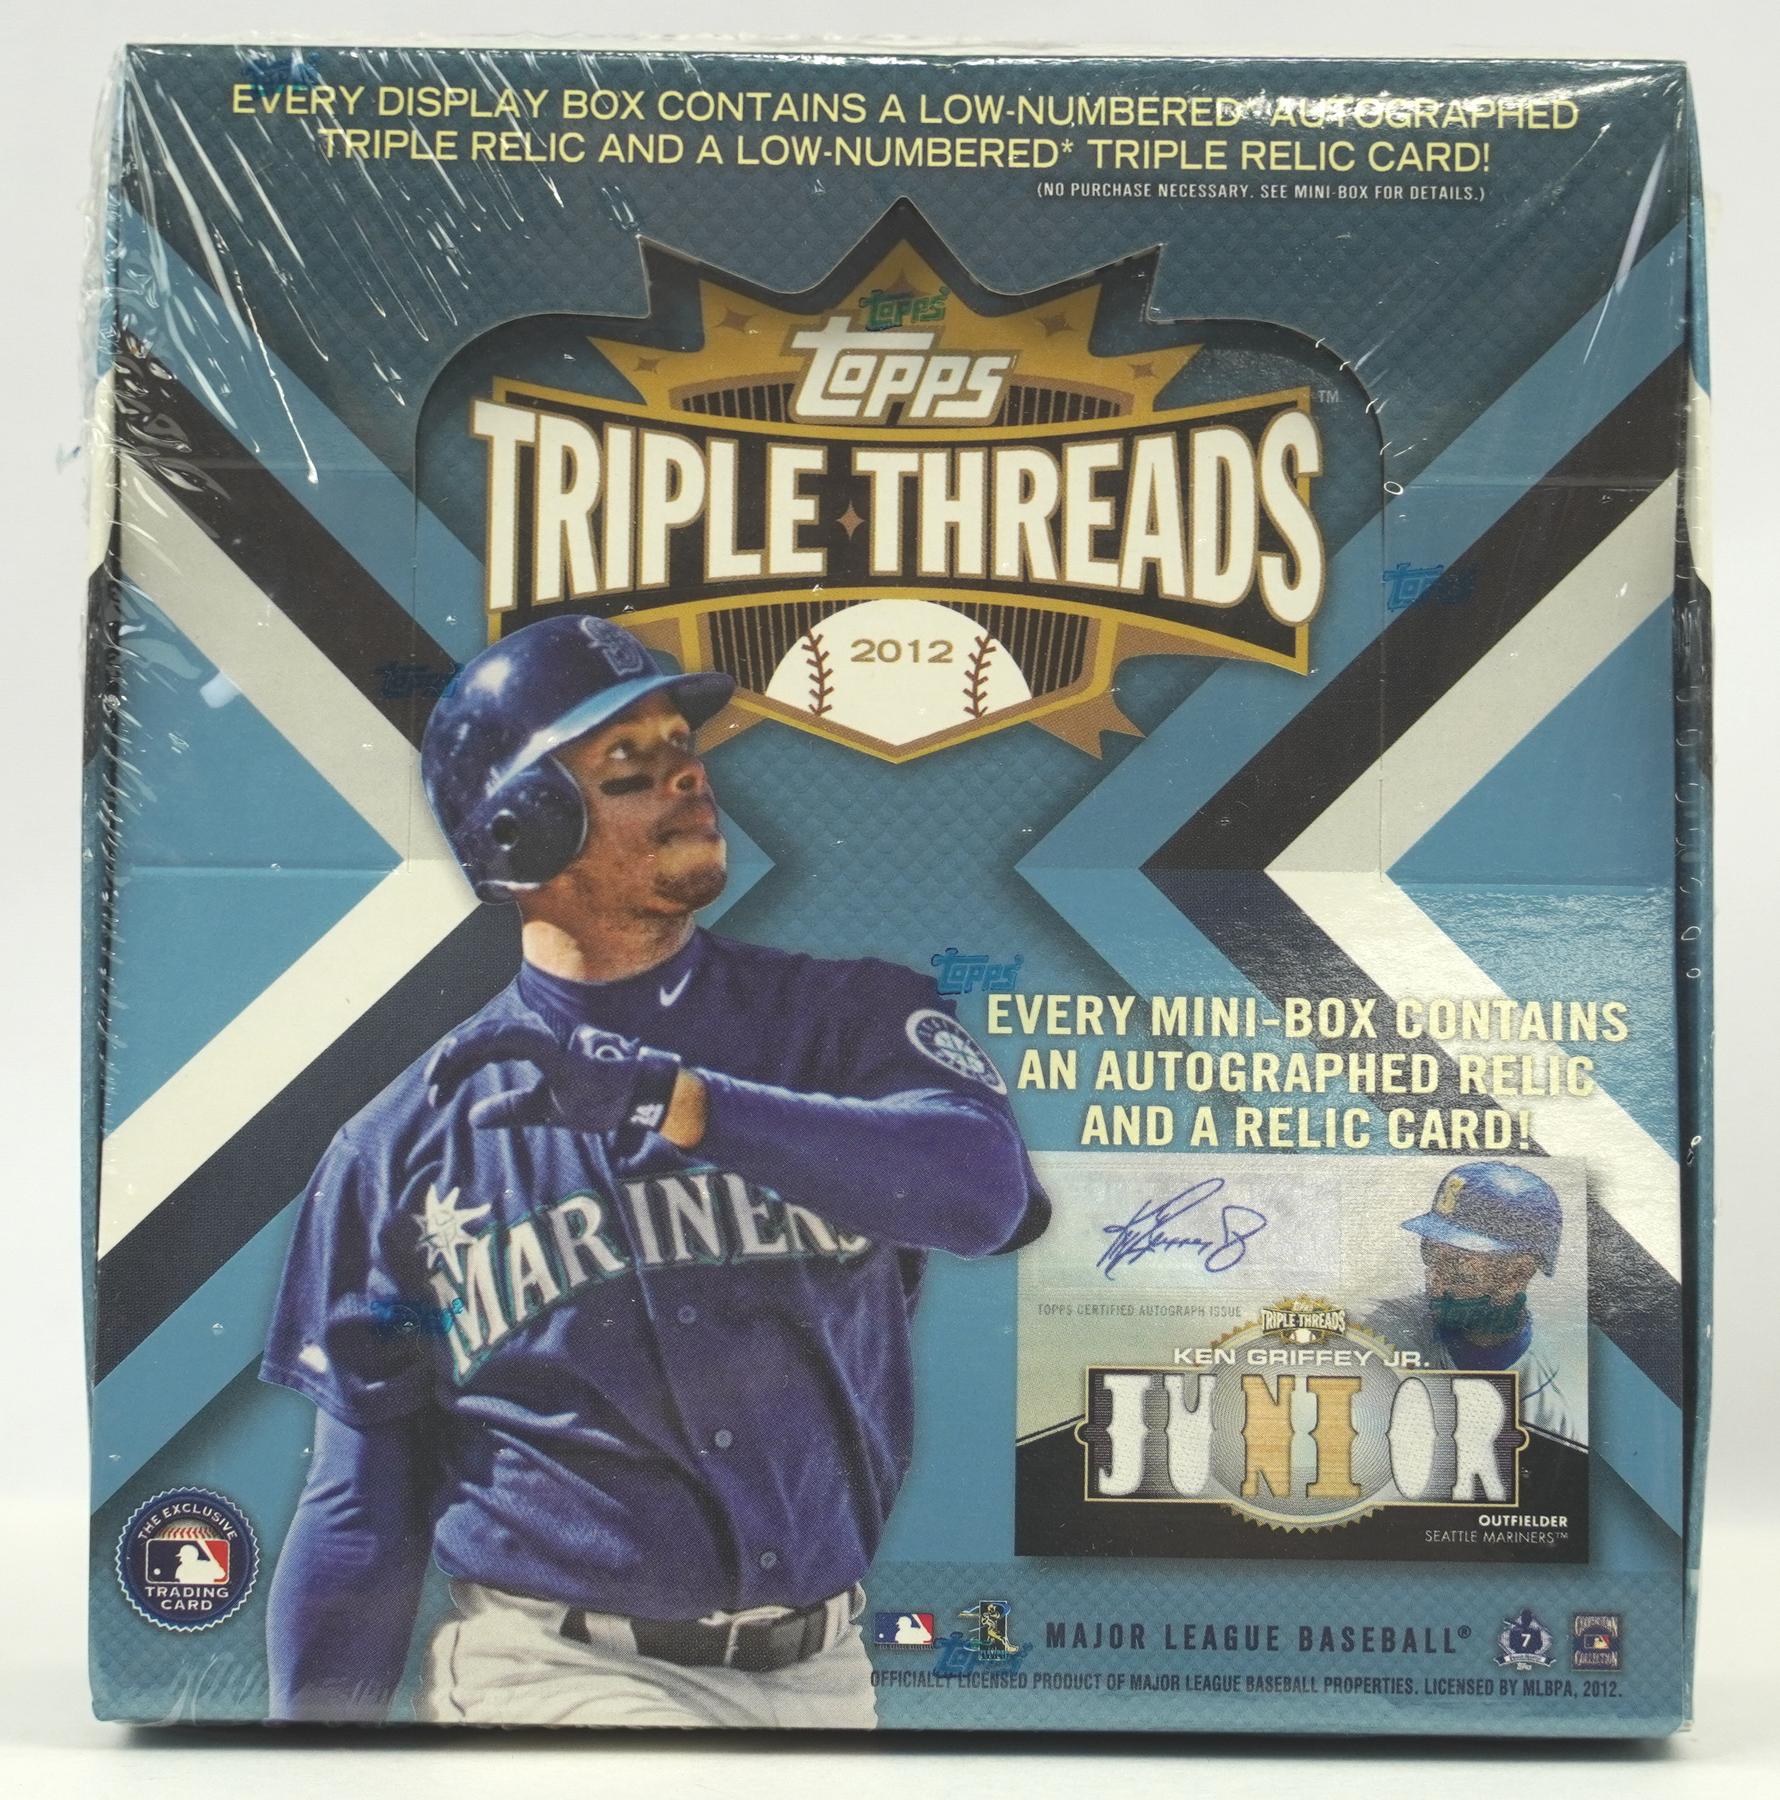 Yu Darvish All Star Game Collectible Baseball Card - 2012 Topps